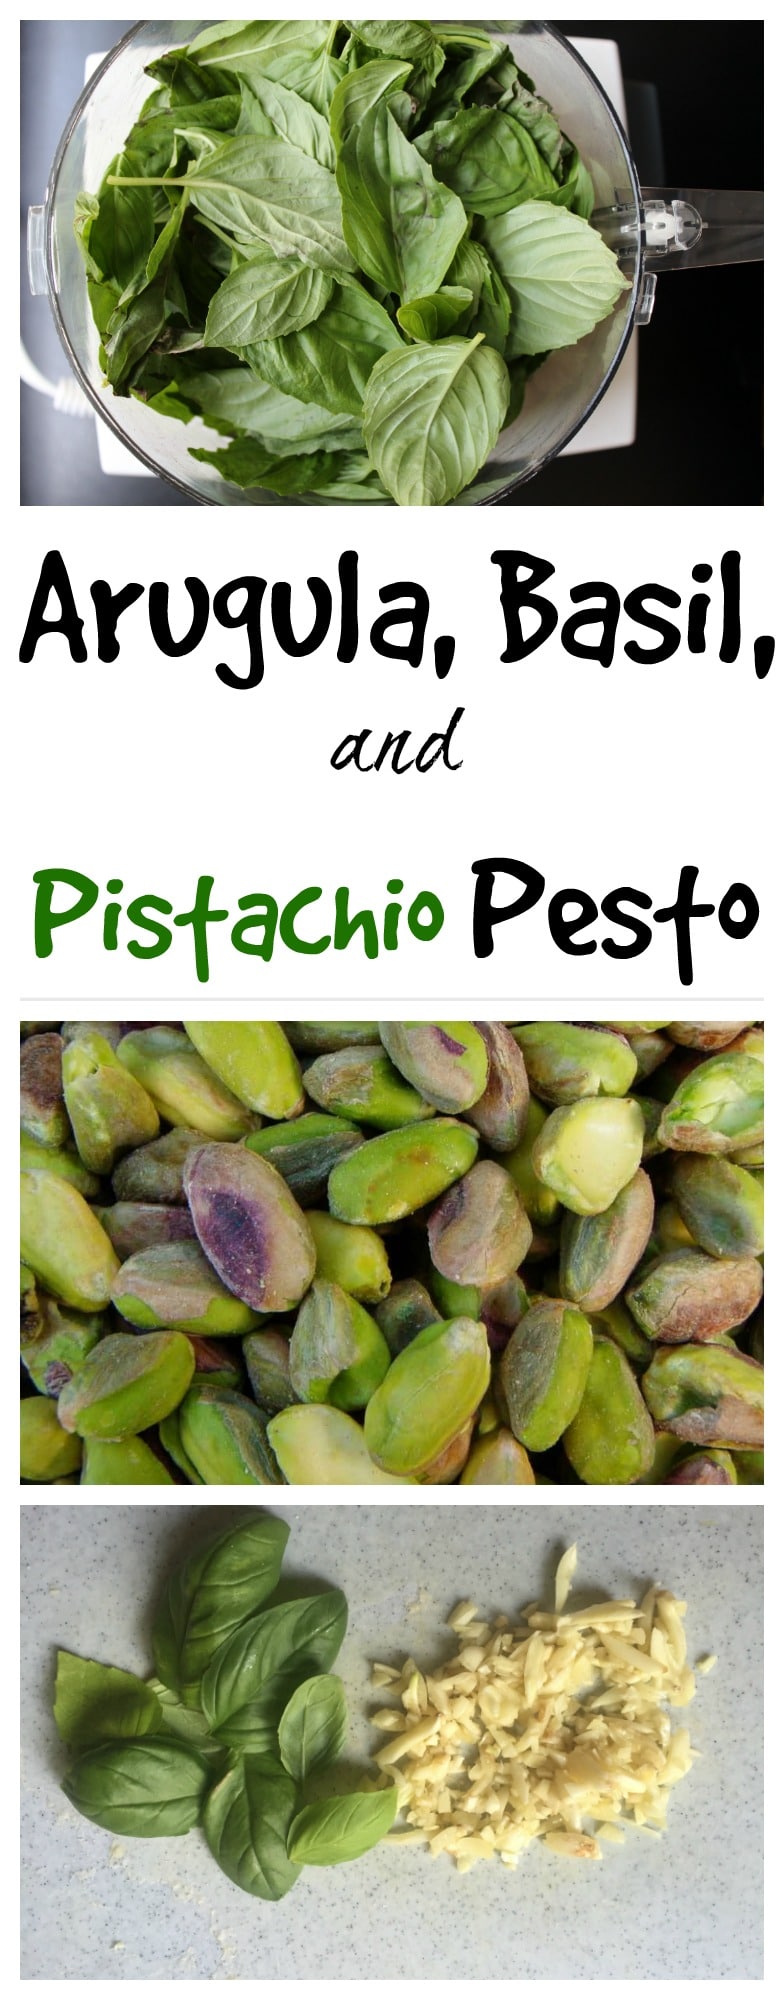 Arugula, Basil, and Pistachio Pesto || Erin Brighton | easy recipes | farm to table | gluten free | 